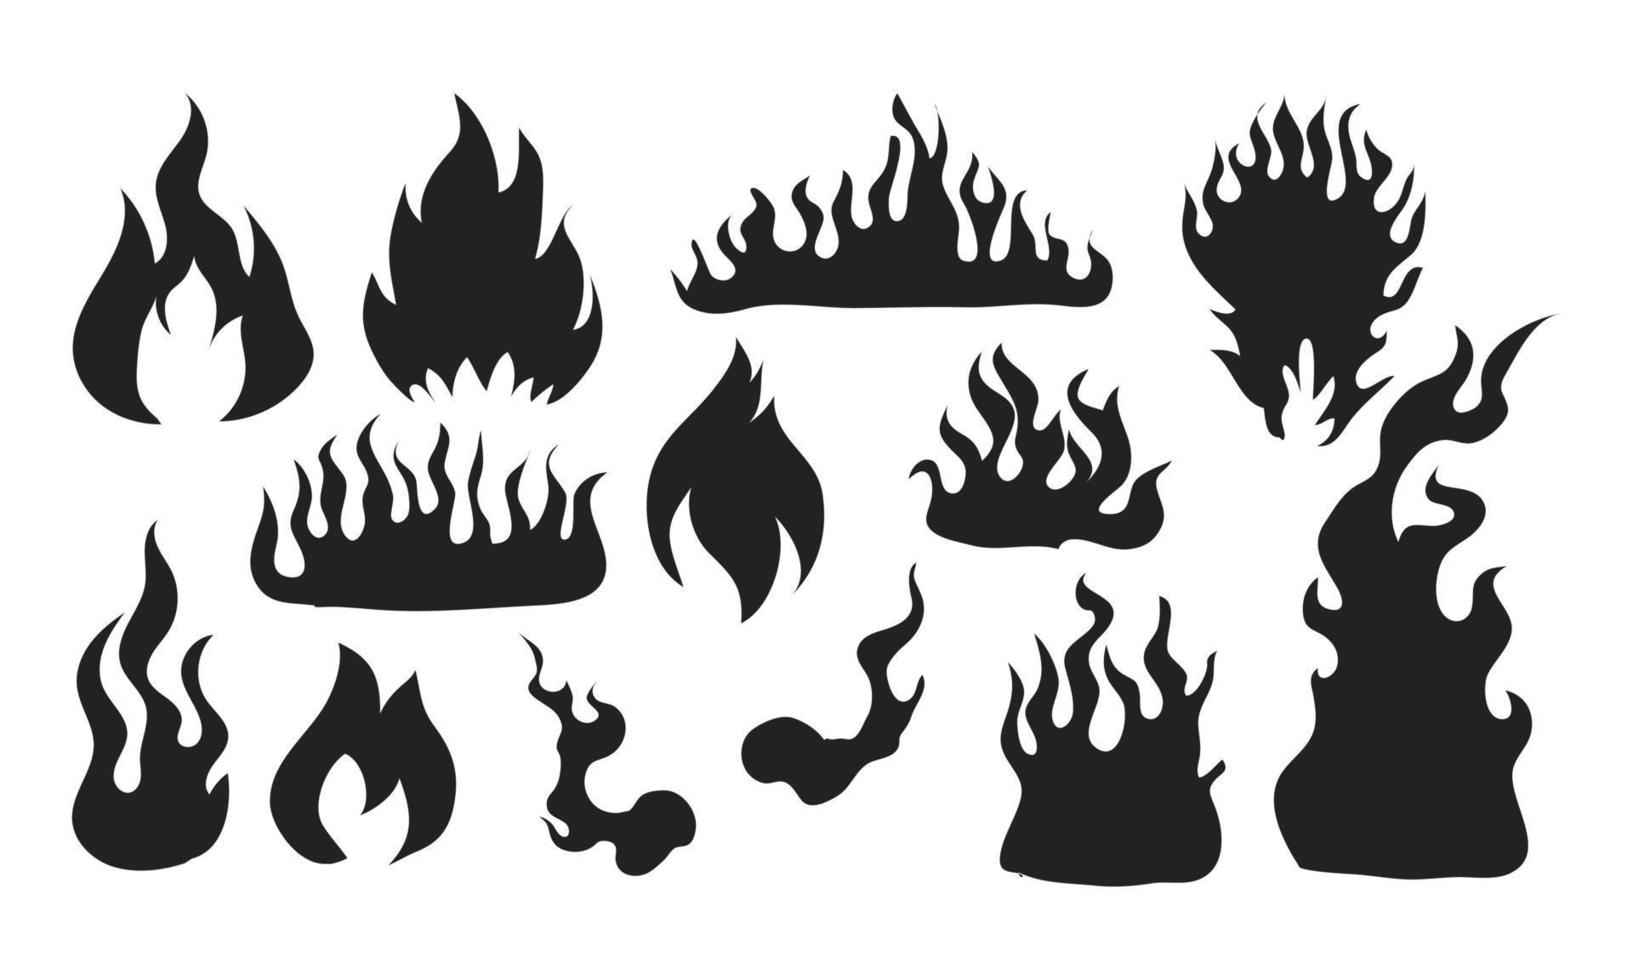 flammes de feu, définir des icônes vectorielles vecteur